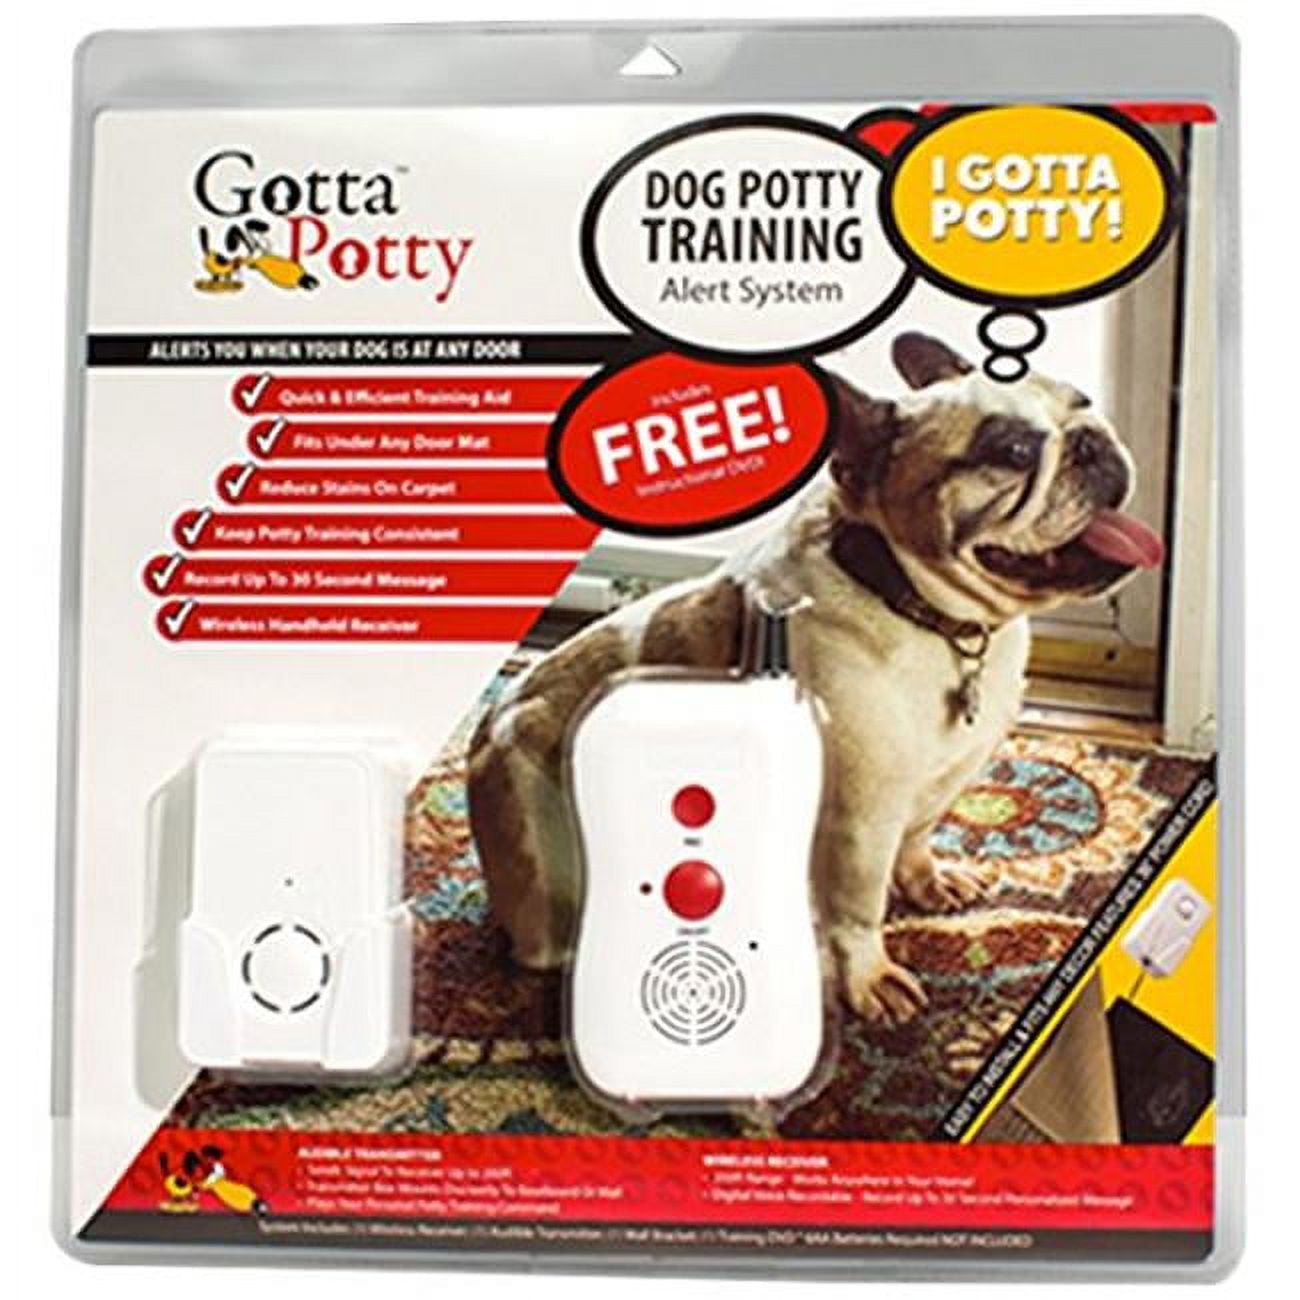 The Source Direct Gottapotty Wireless Dog Potty Training System